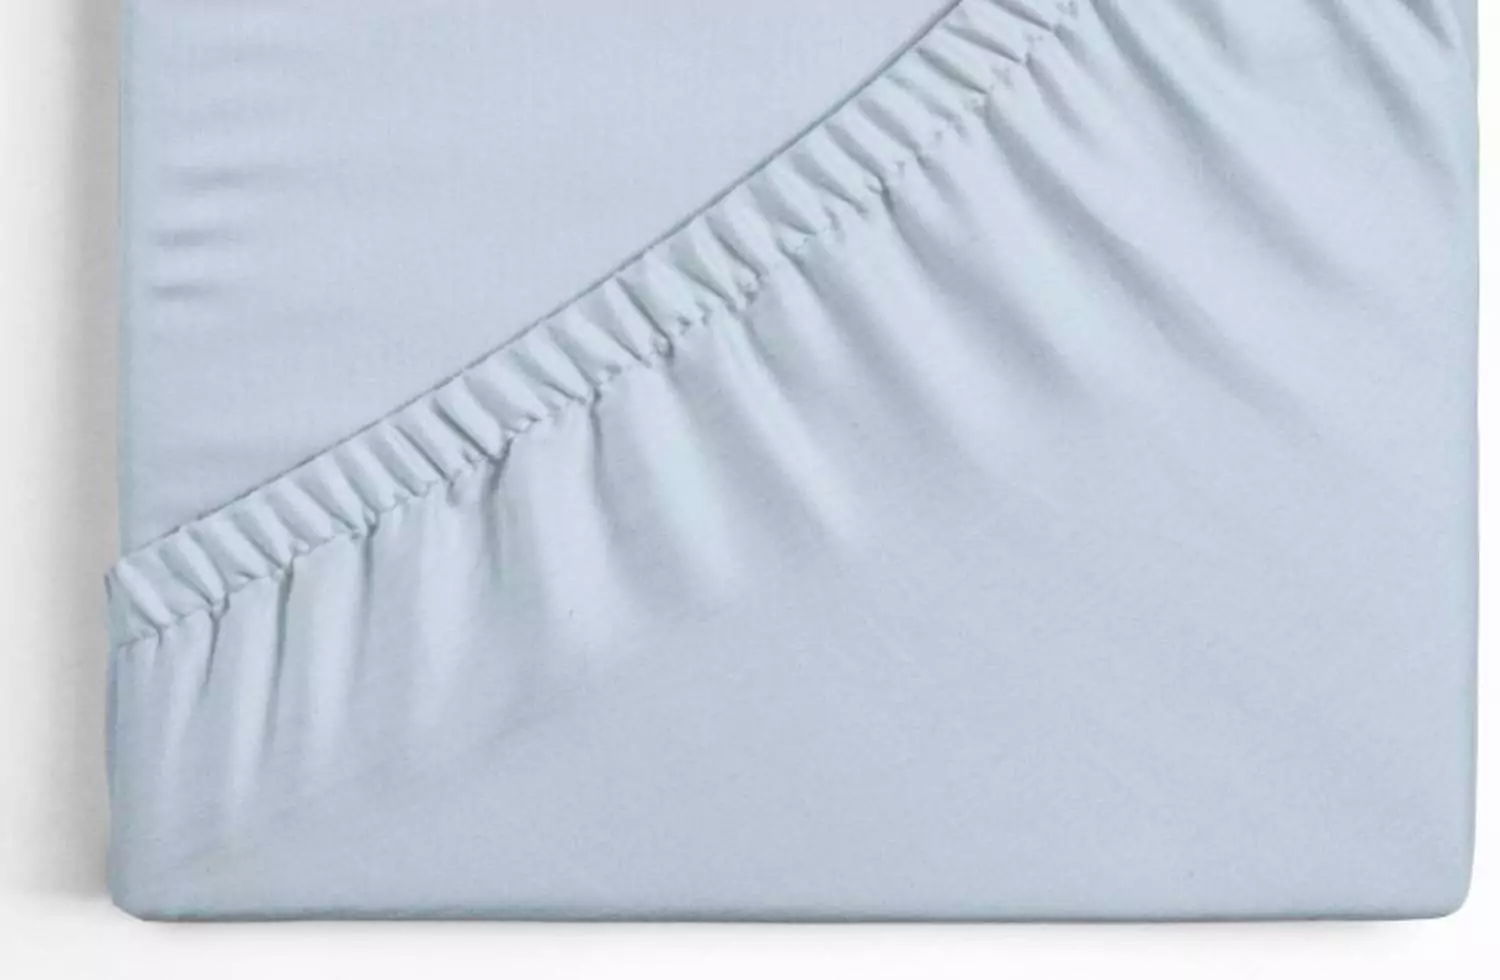 Sábana bajera ajustable lisa Azul cama 150 cm - 150x190/200 cm, 100%  algodón.